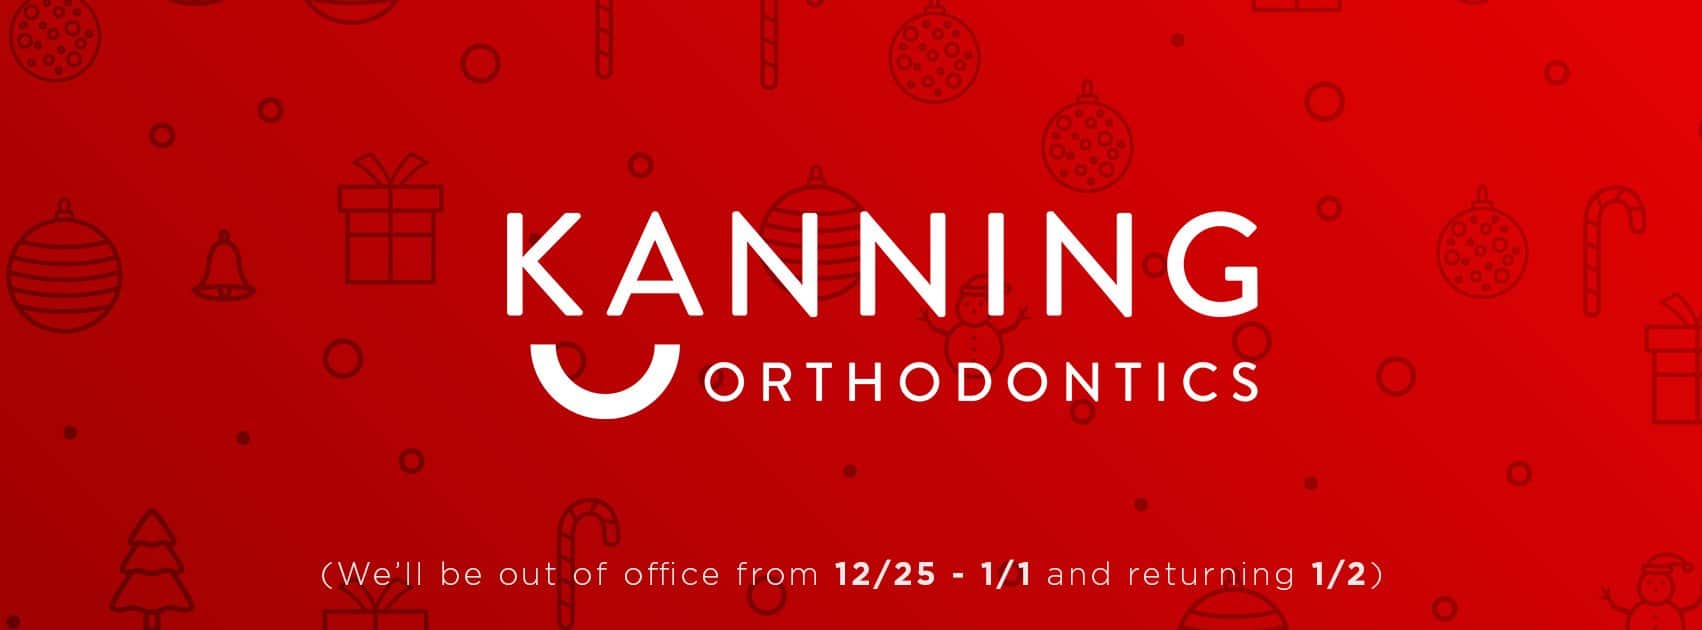 kanning-ortho-facebook-header Happy Holidays from Kanning Orthodontics!  - Braces and Invisalign in Liberty, Missouri - Kanning Orthodontics